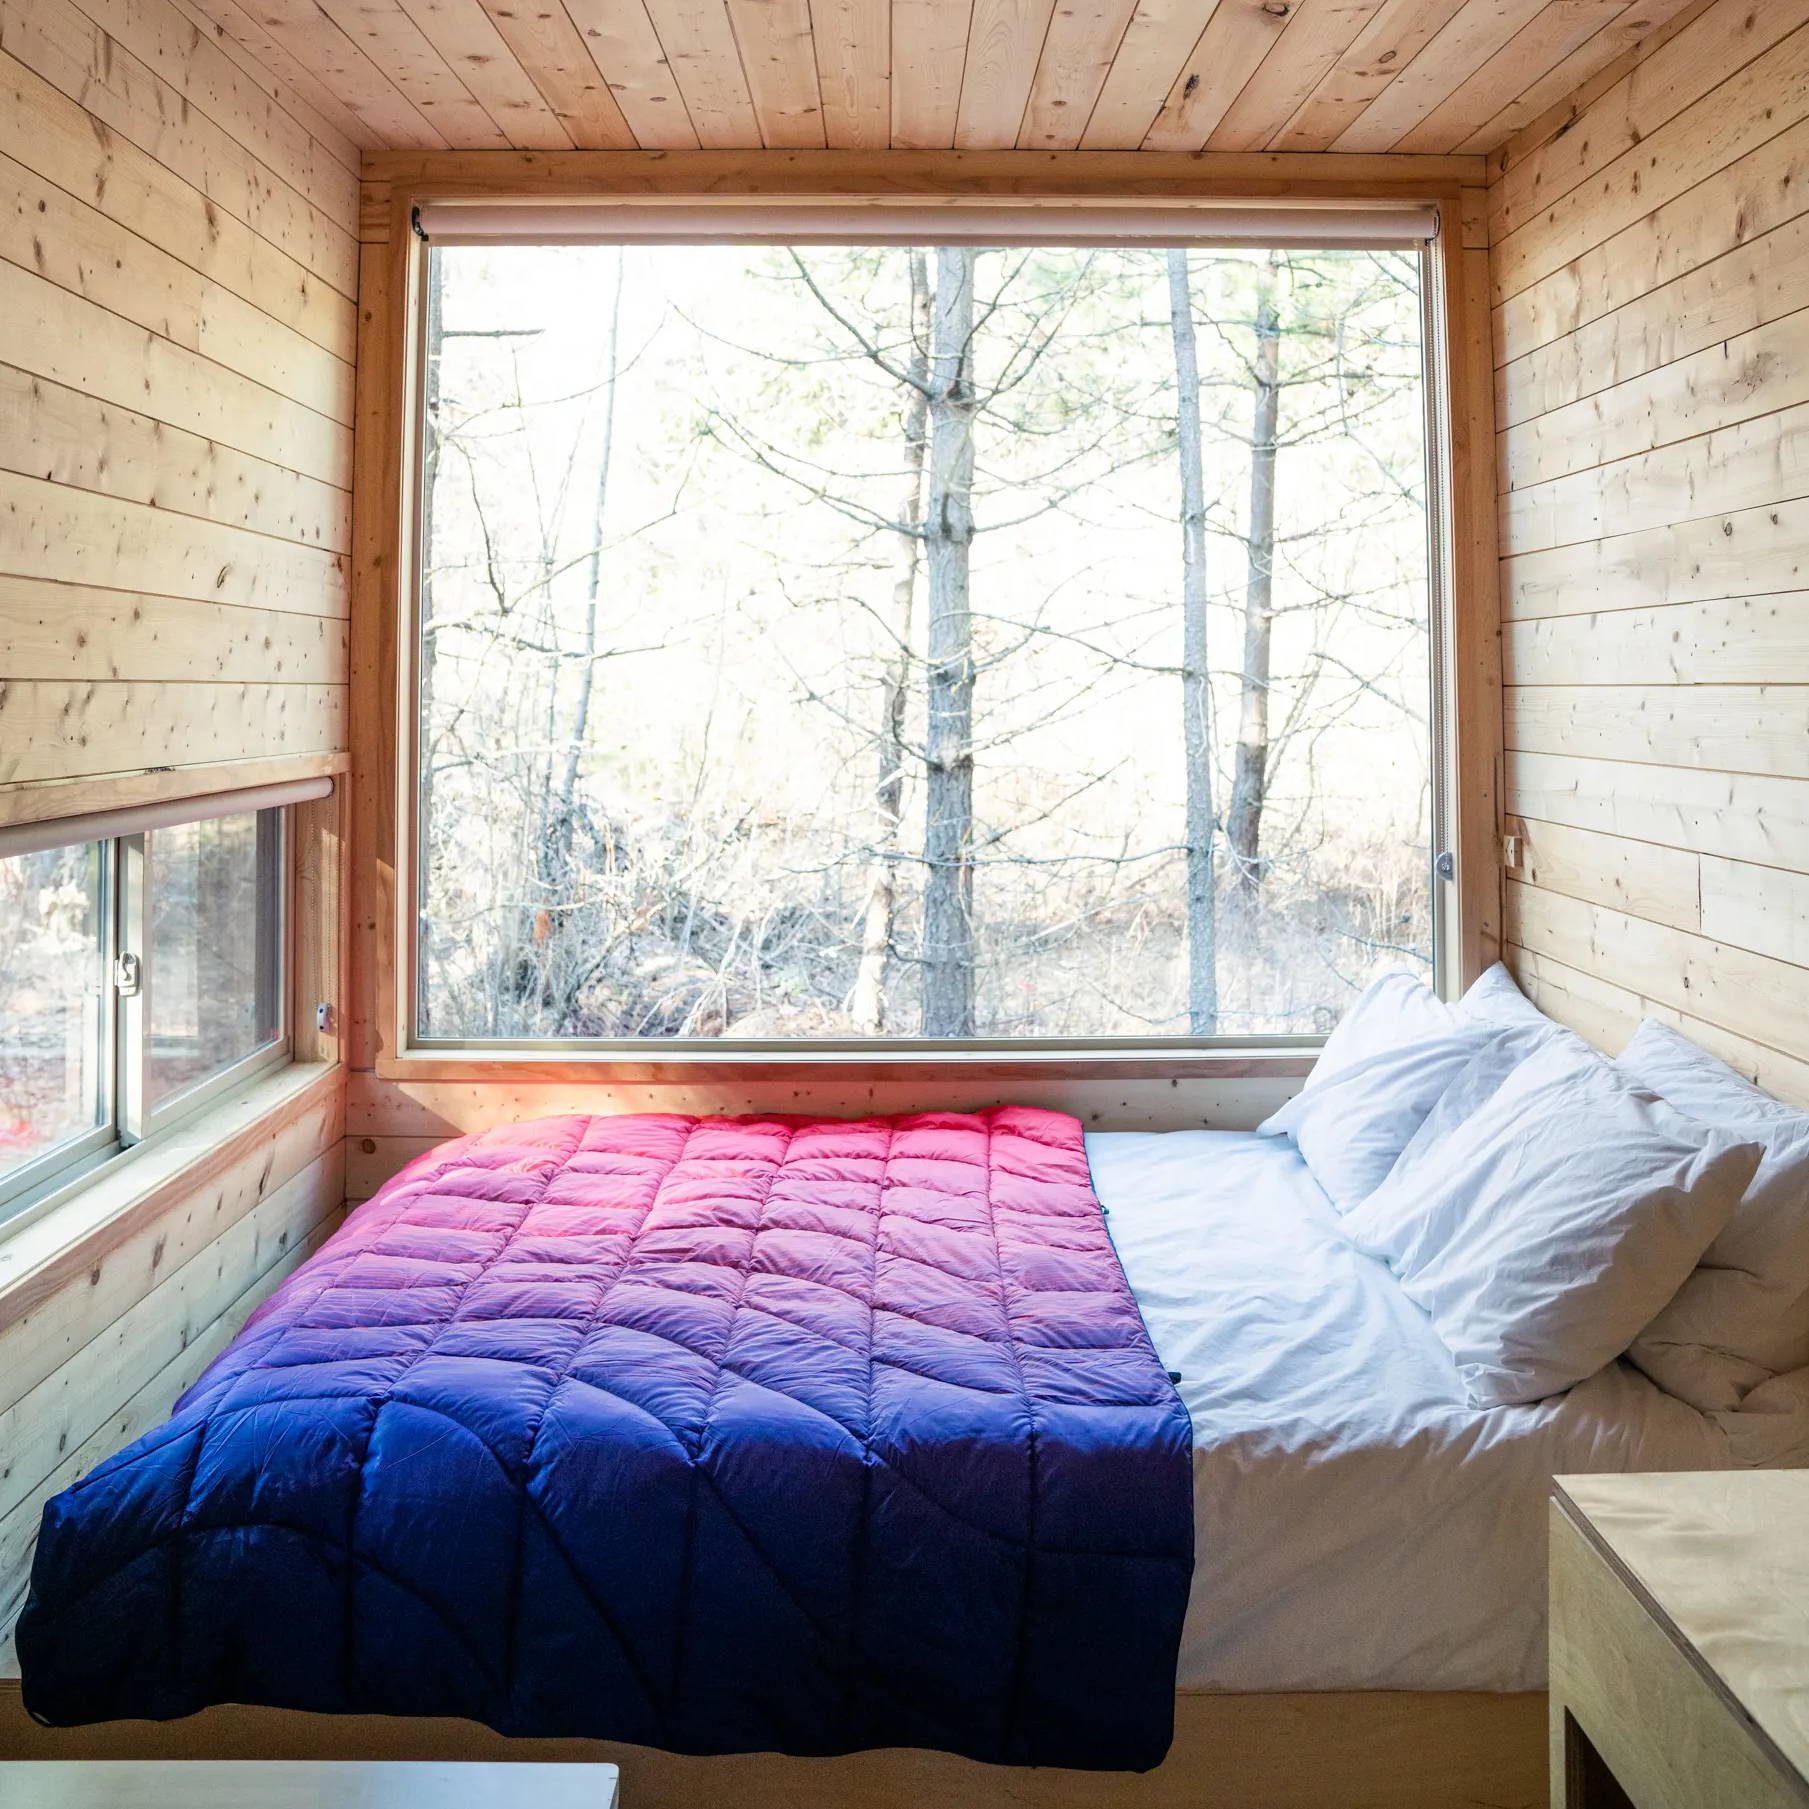 Rumpl Ripple fade blanket on a bed inside a Getaway House